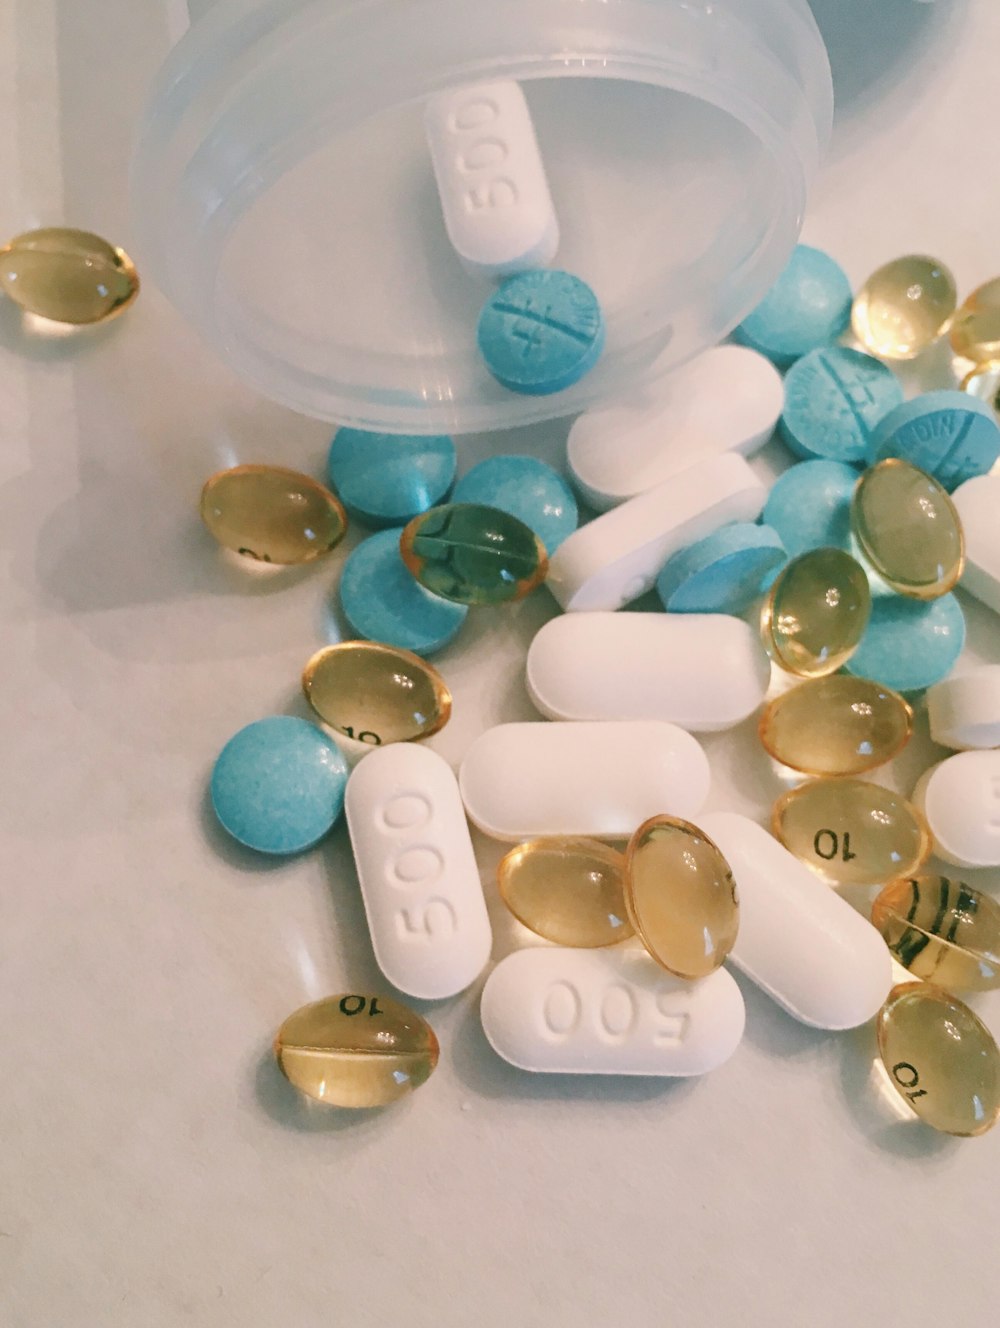 píldoras de medicamentos de colores variados